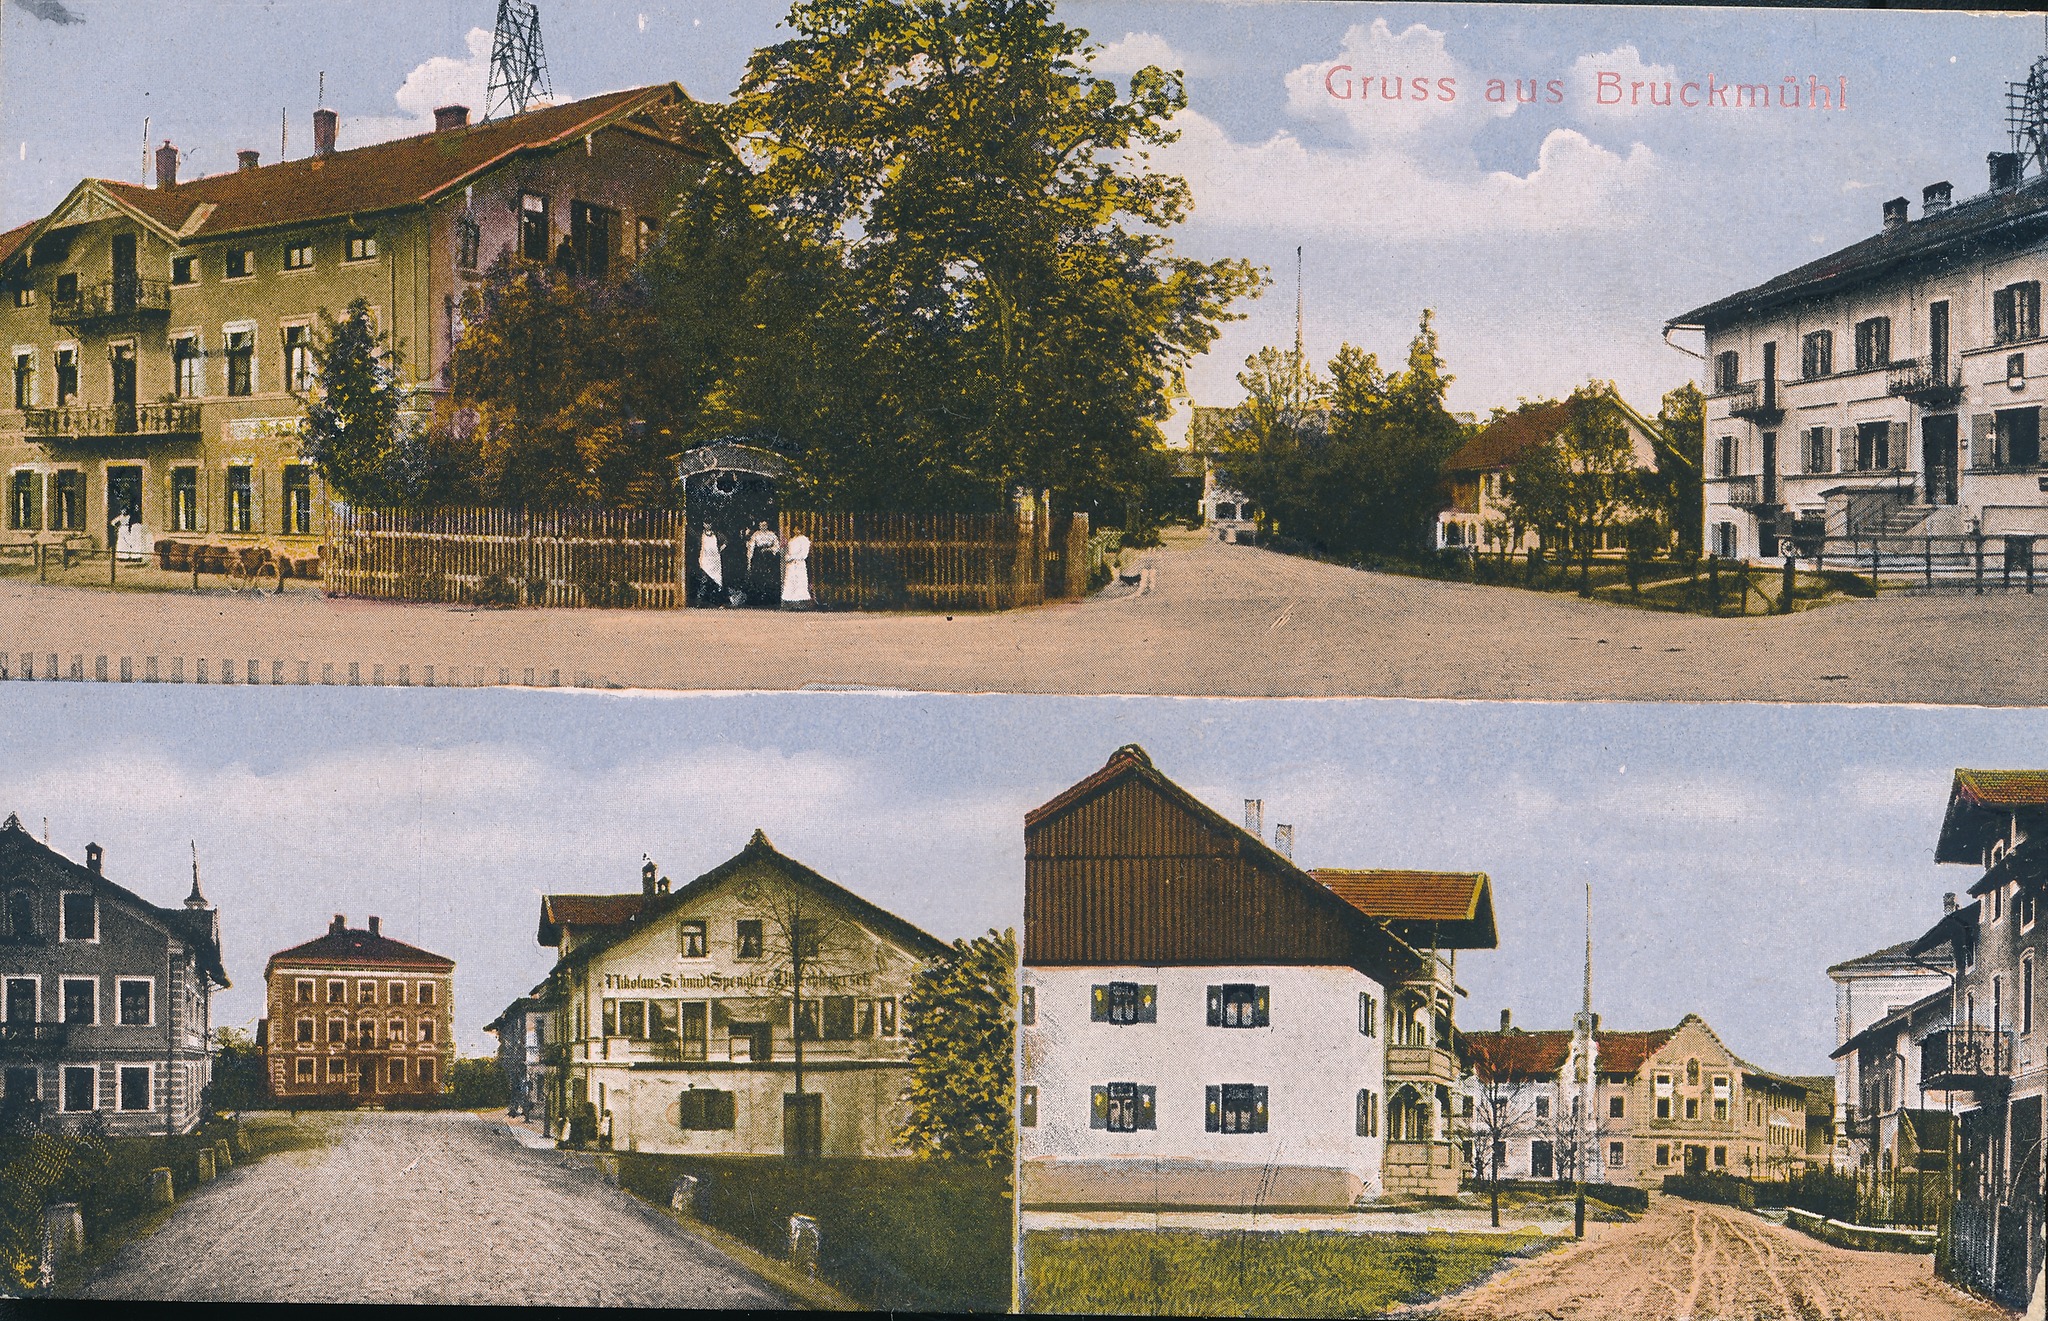 Postkarte aus Bruckmühl im Landkreis Rosenheim im Jahr 1916. Foto: Archiv Herbert Borrmann